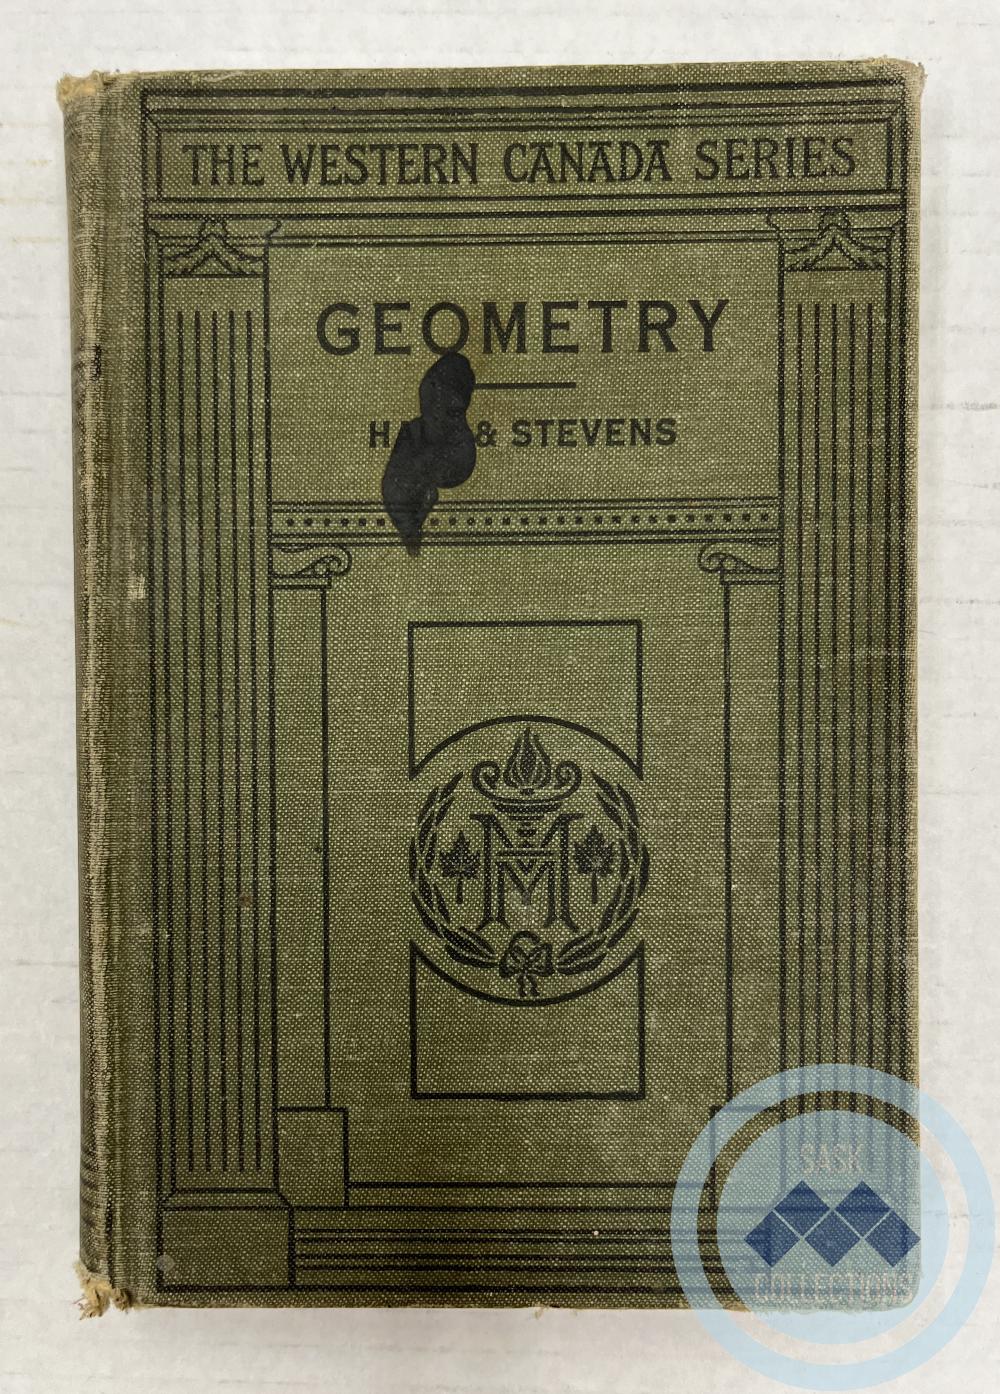 Book - Geometry